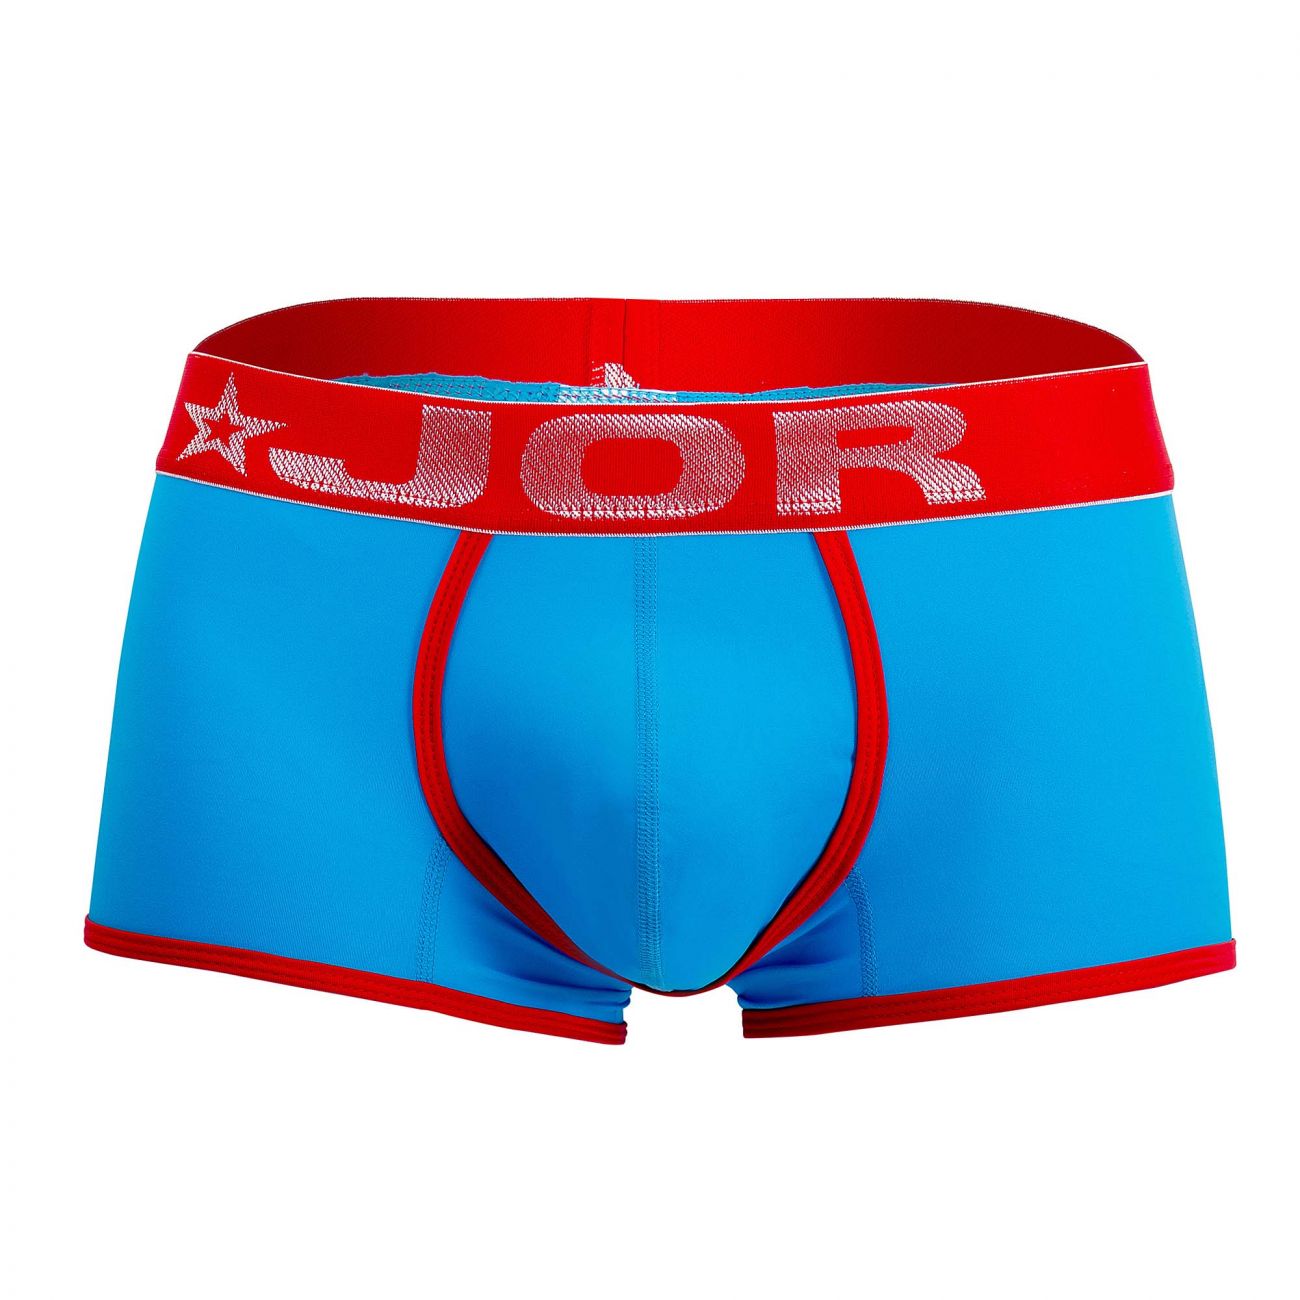 Mens Underwear: JOR 1085 Eros Trunks | eBay